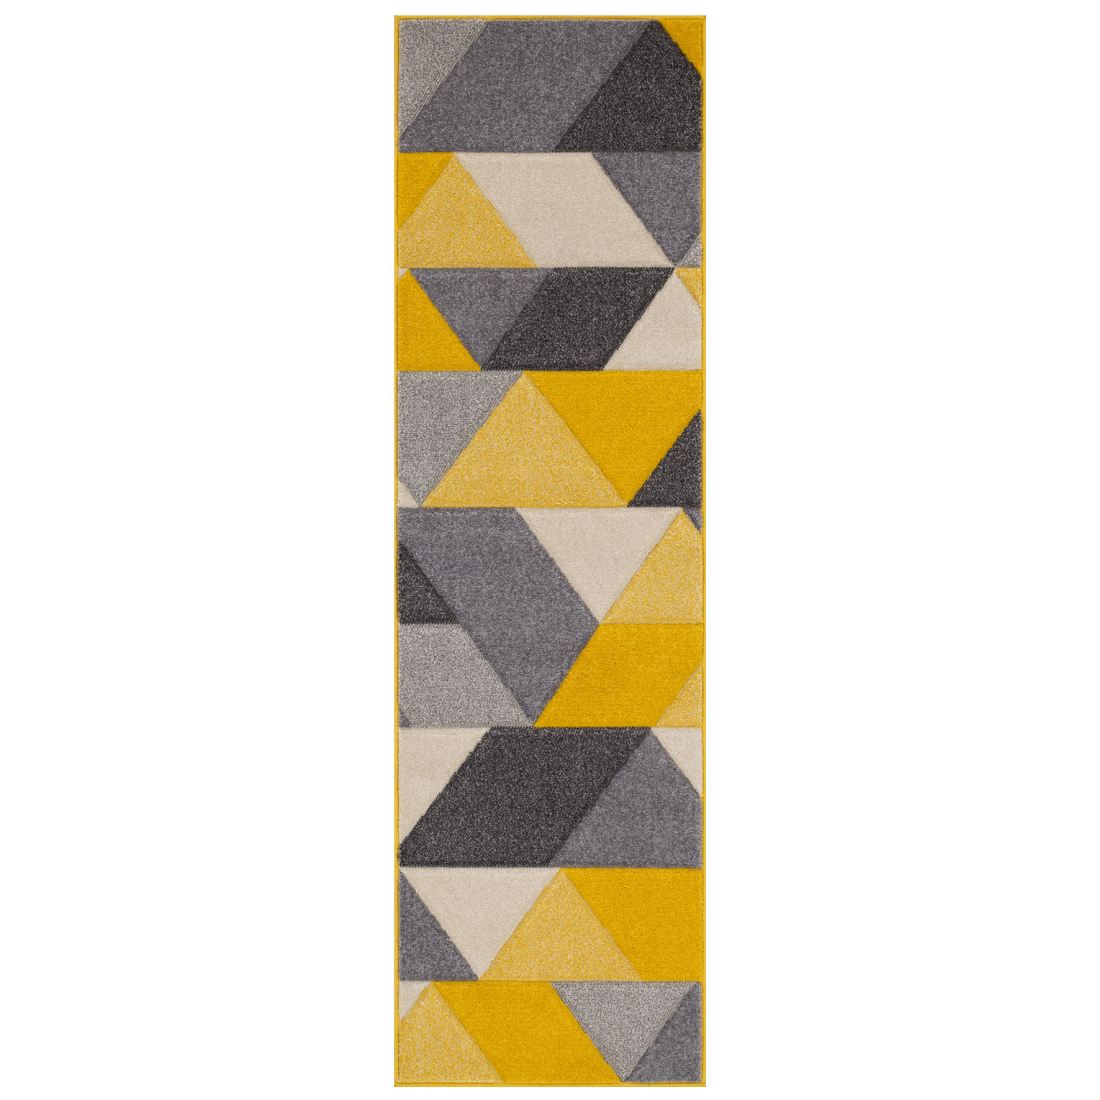 Portland Geometric Rug - 670j Grey Yellow Cream